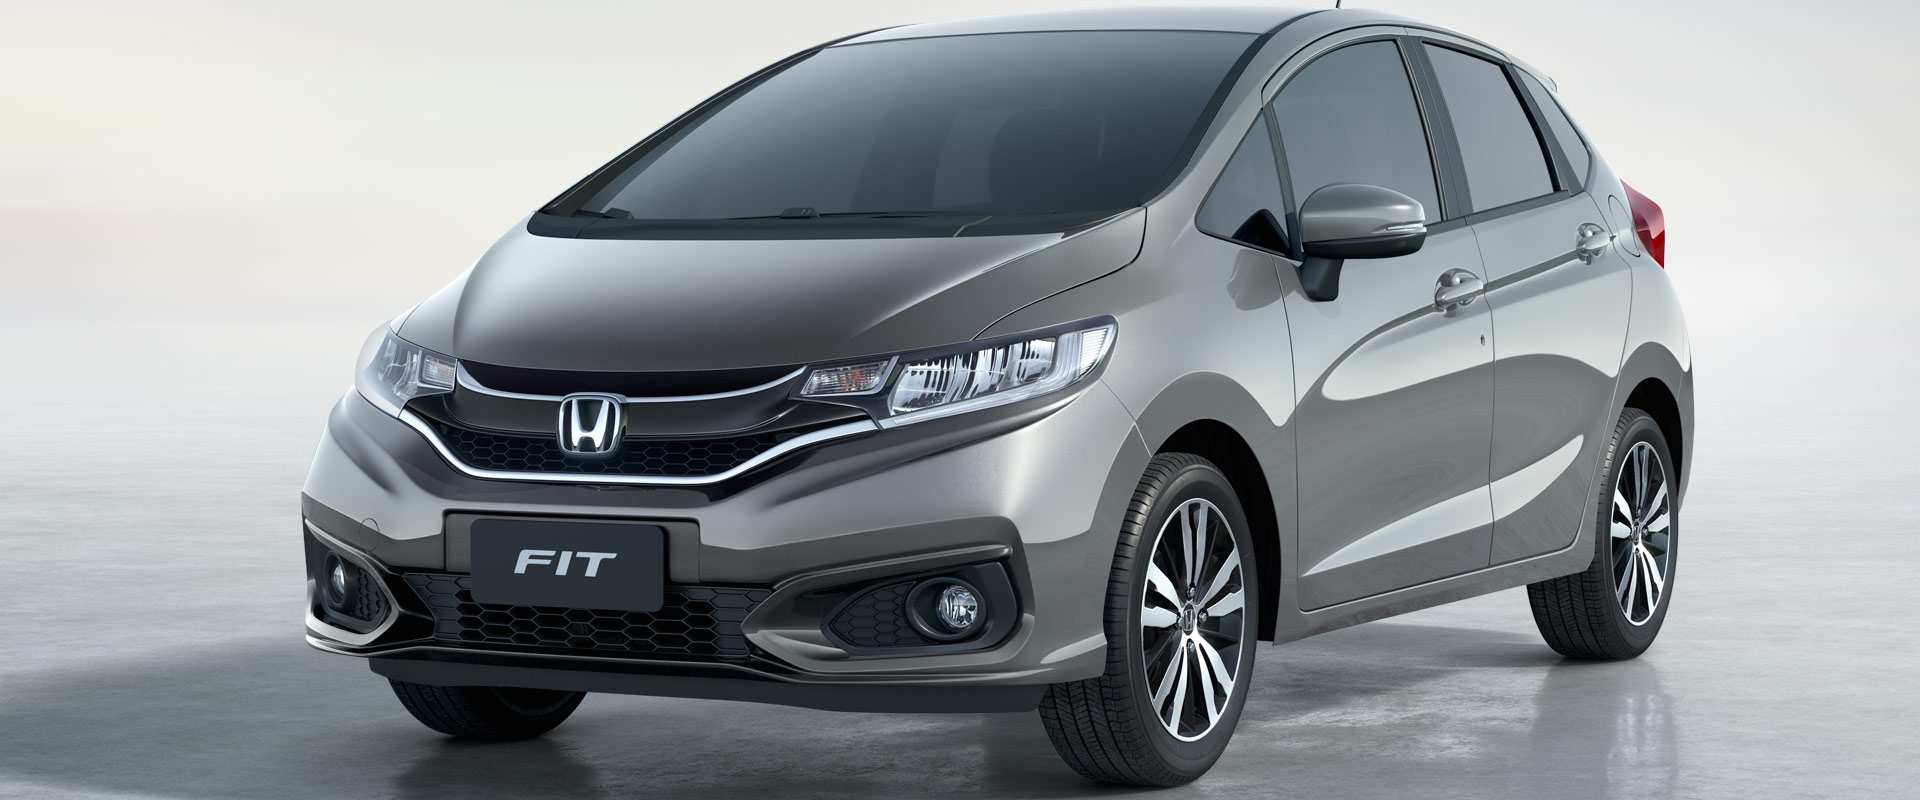 Carros da Honda: Honda Fit